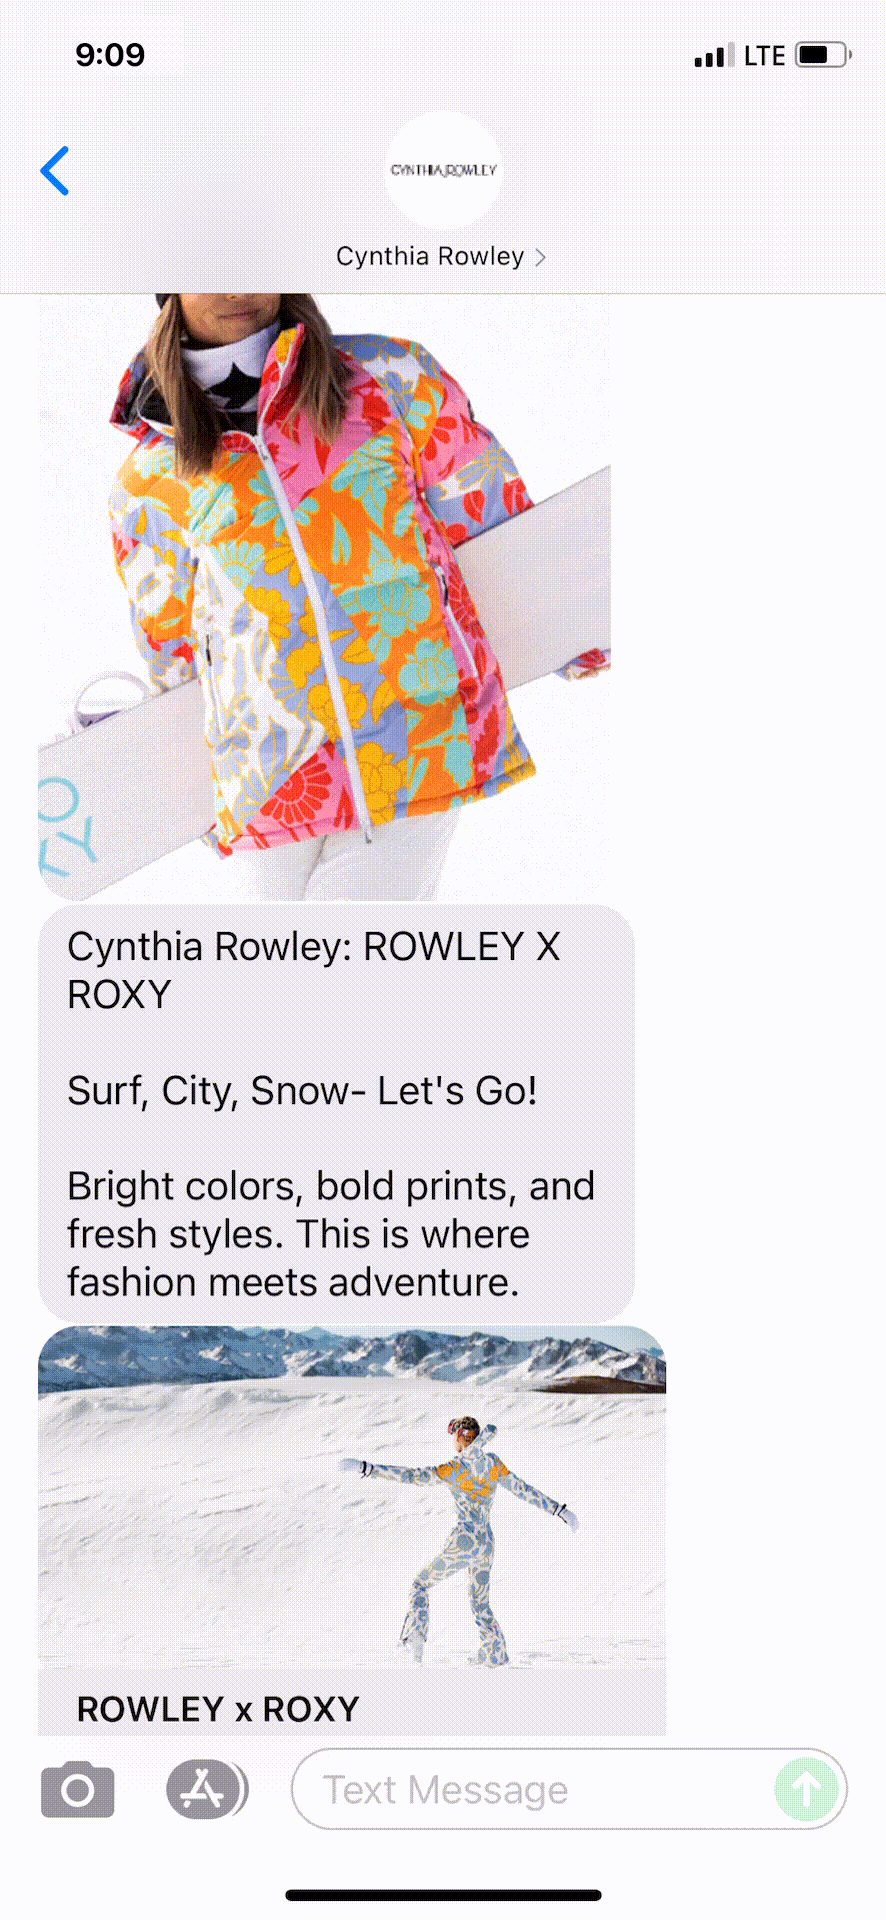 Cynthia-Rowley-Text-Message-Marketing-Example-11.03.2021